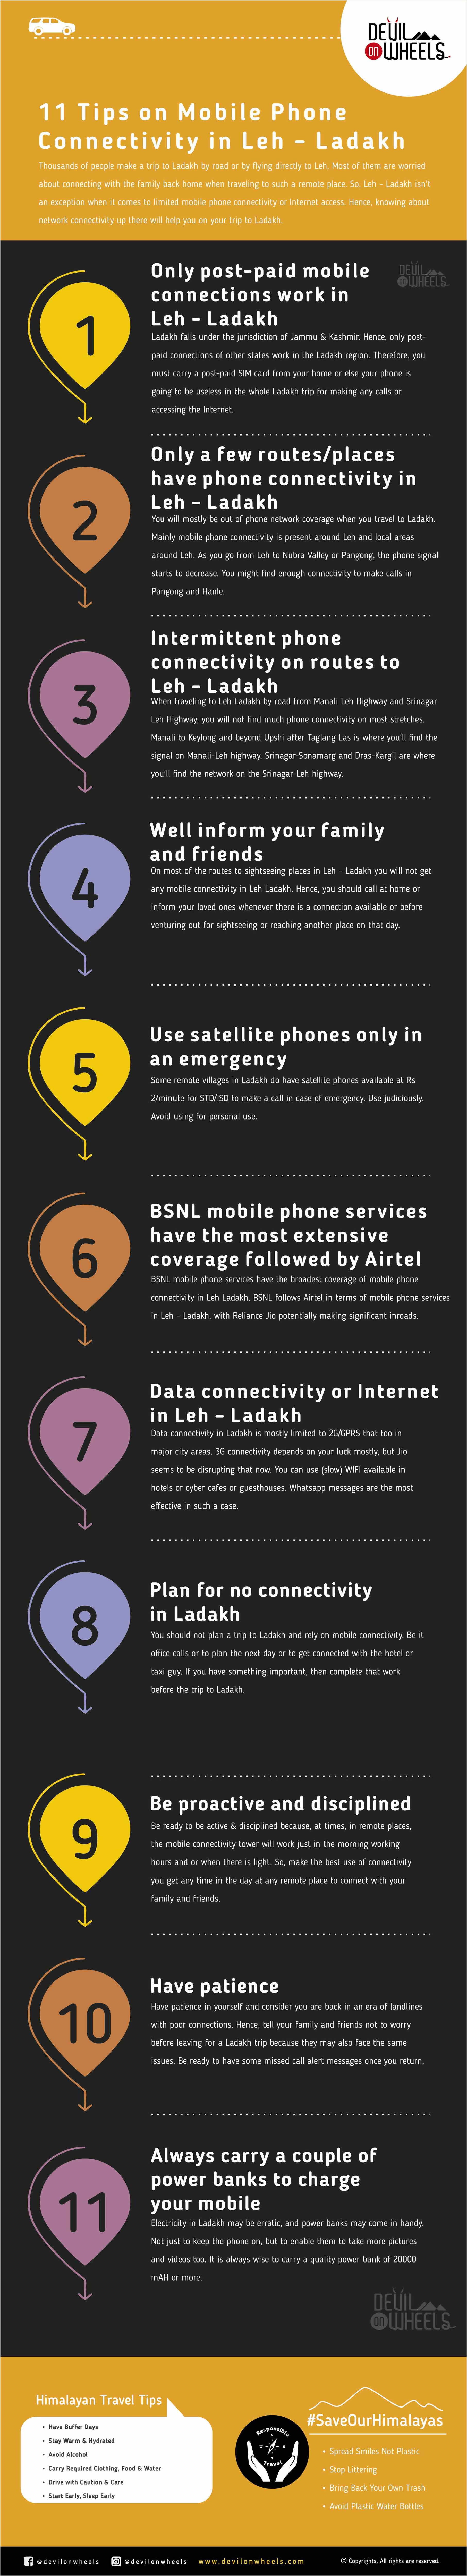 Mobile phone network connectivity in Ladakh region